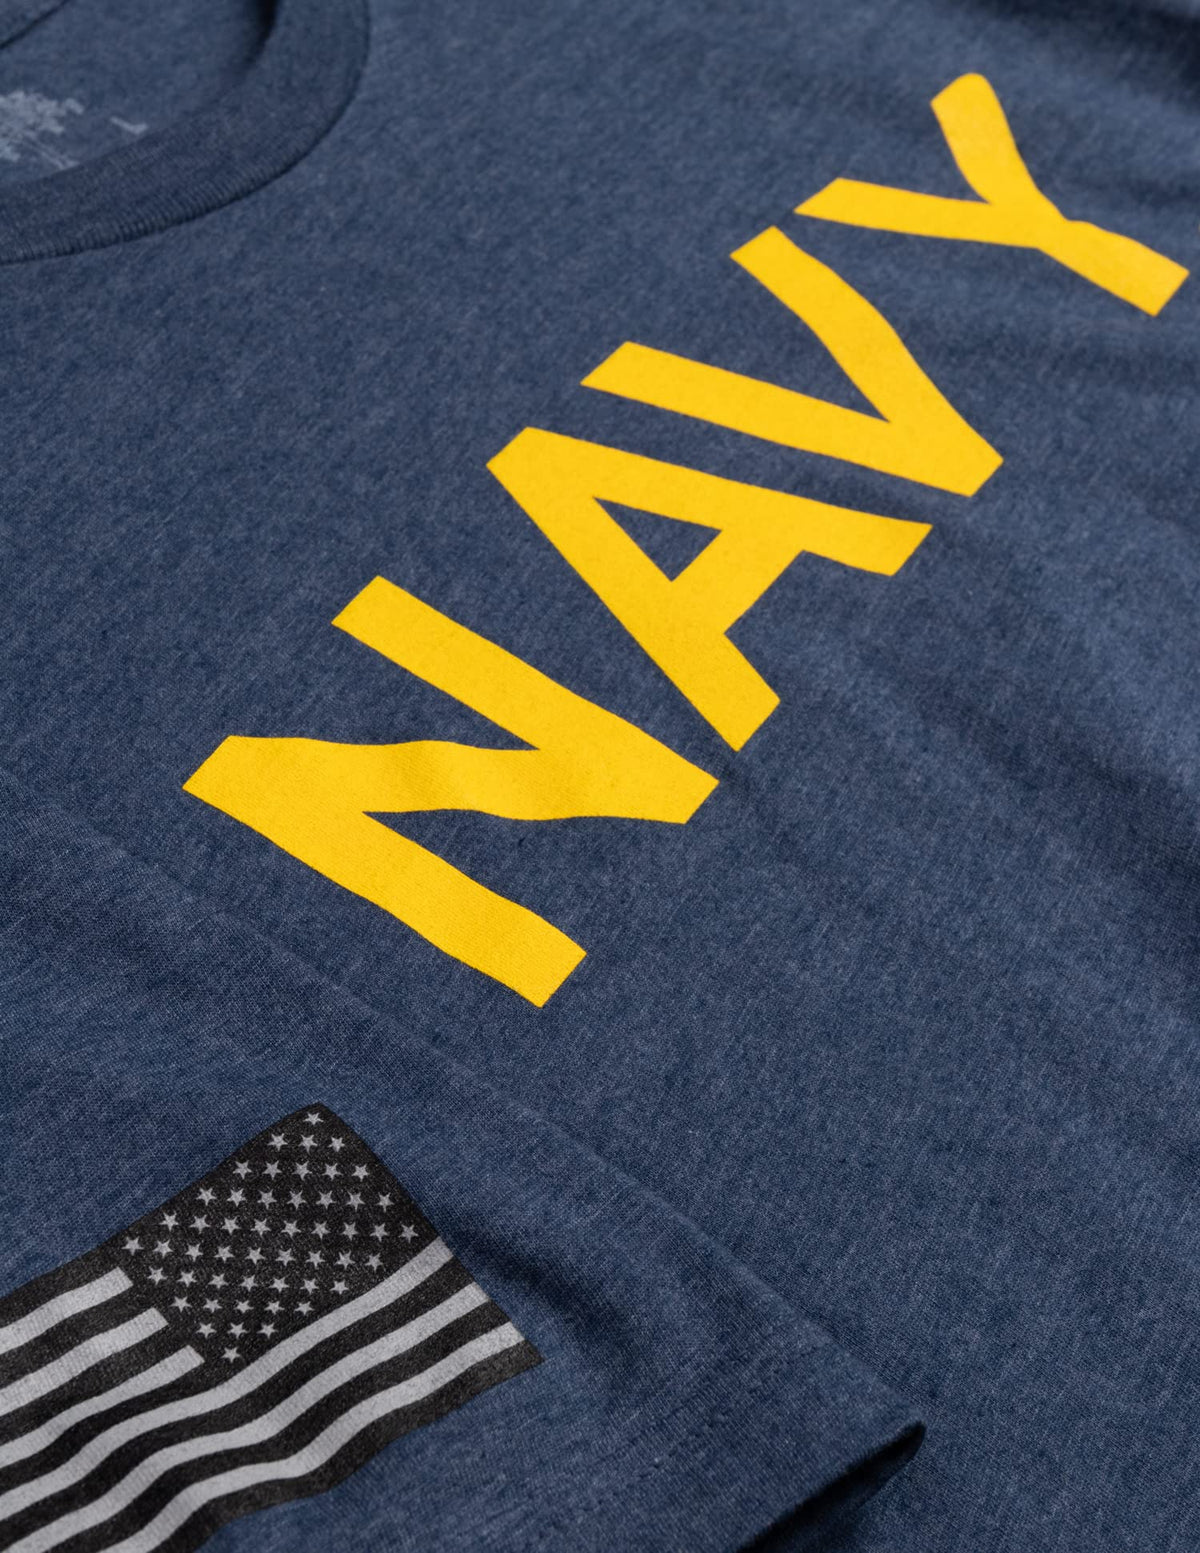 USS San Antonio, LPD-17 | U.S. Navy Sailor Veteran USN United States Naval T-shirt for Men Women